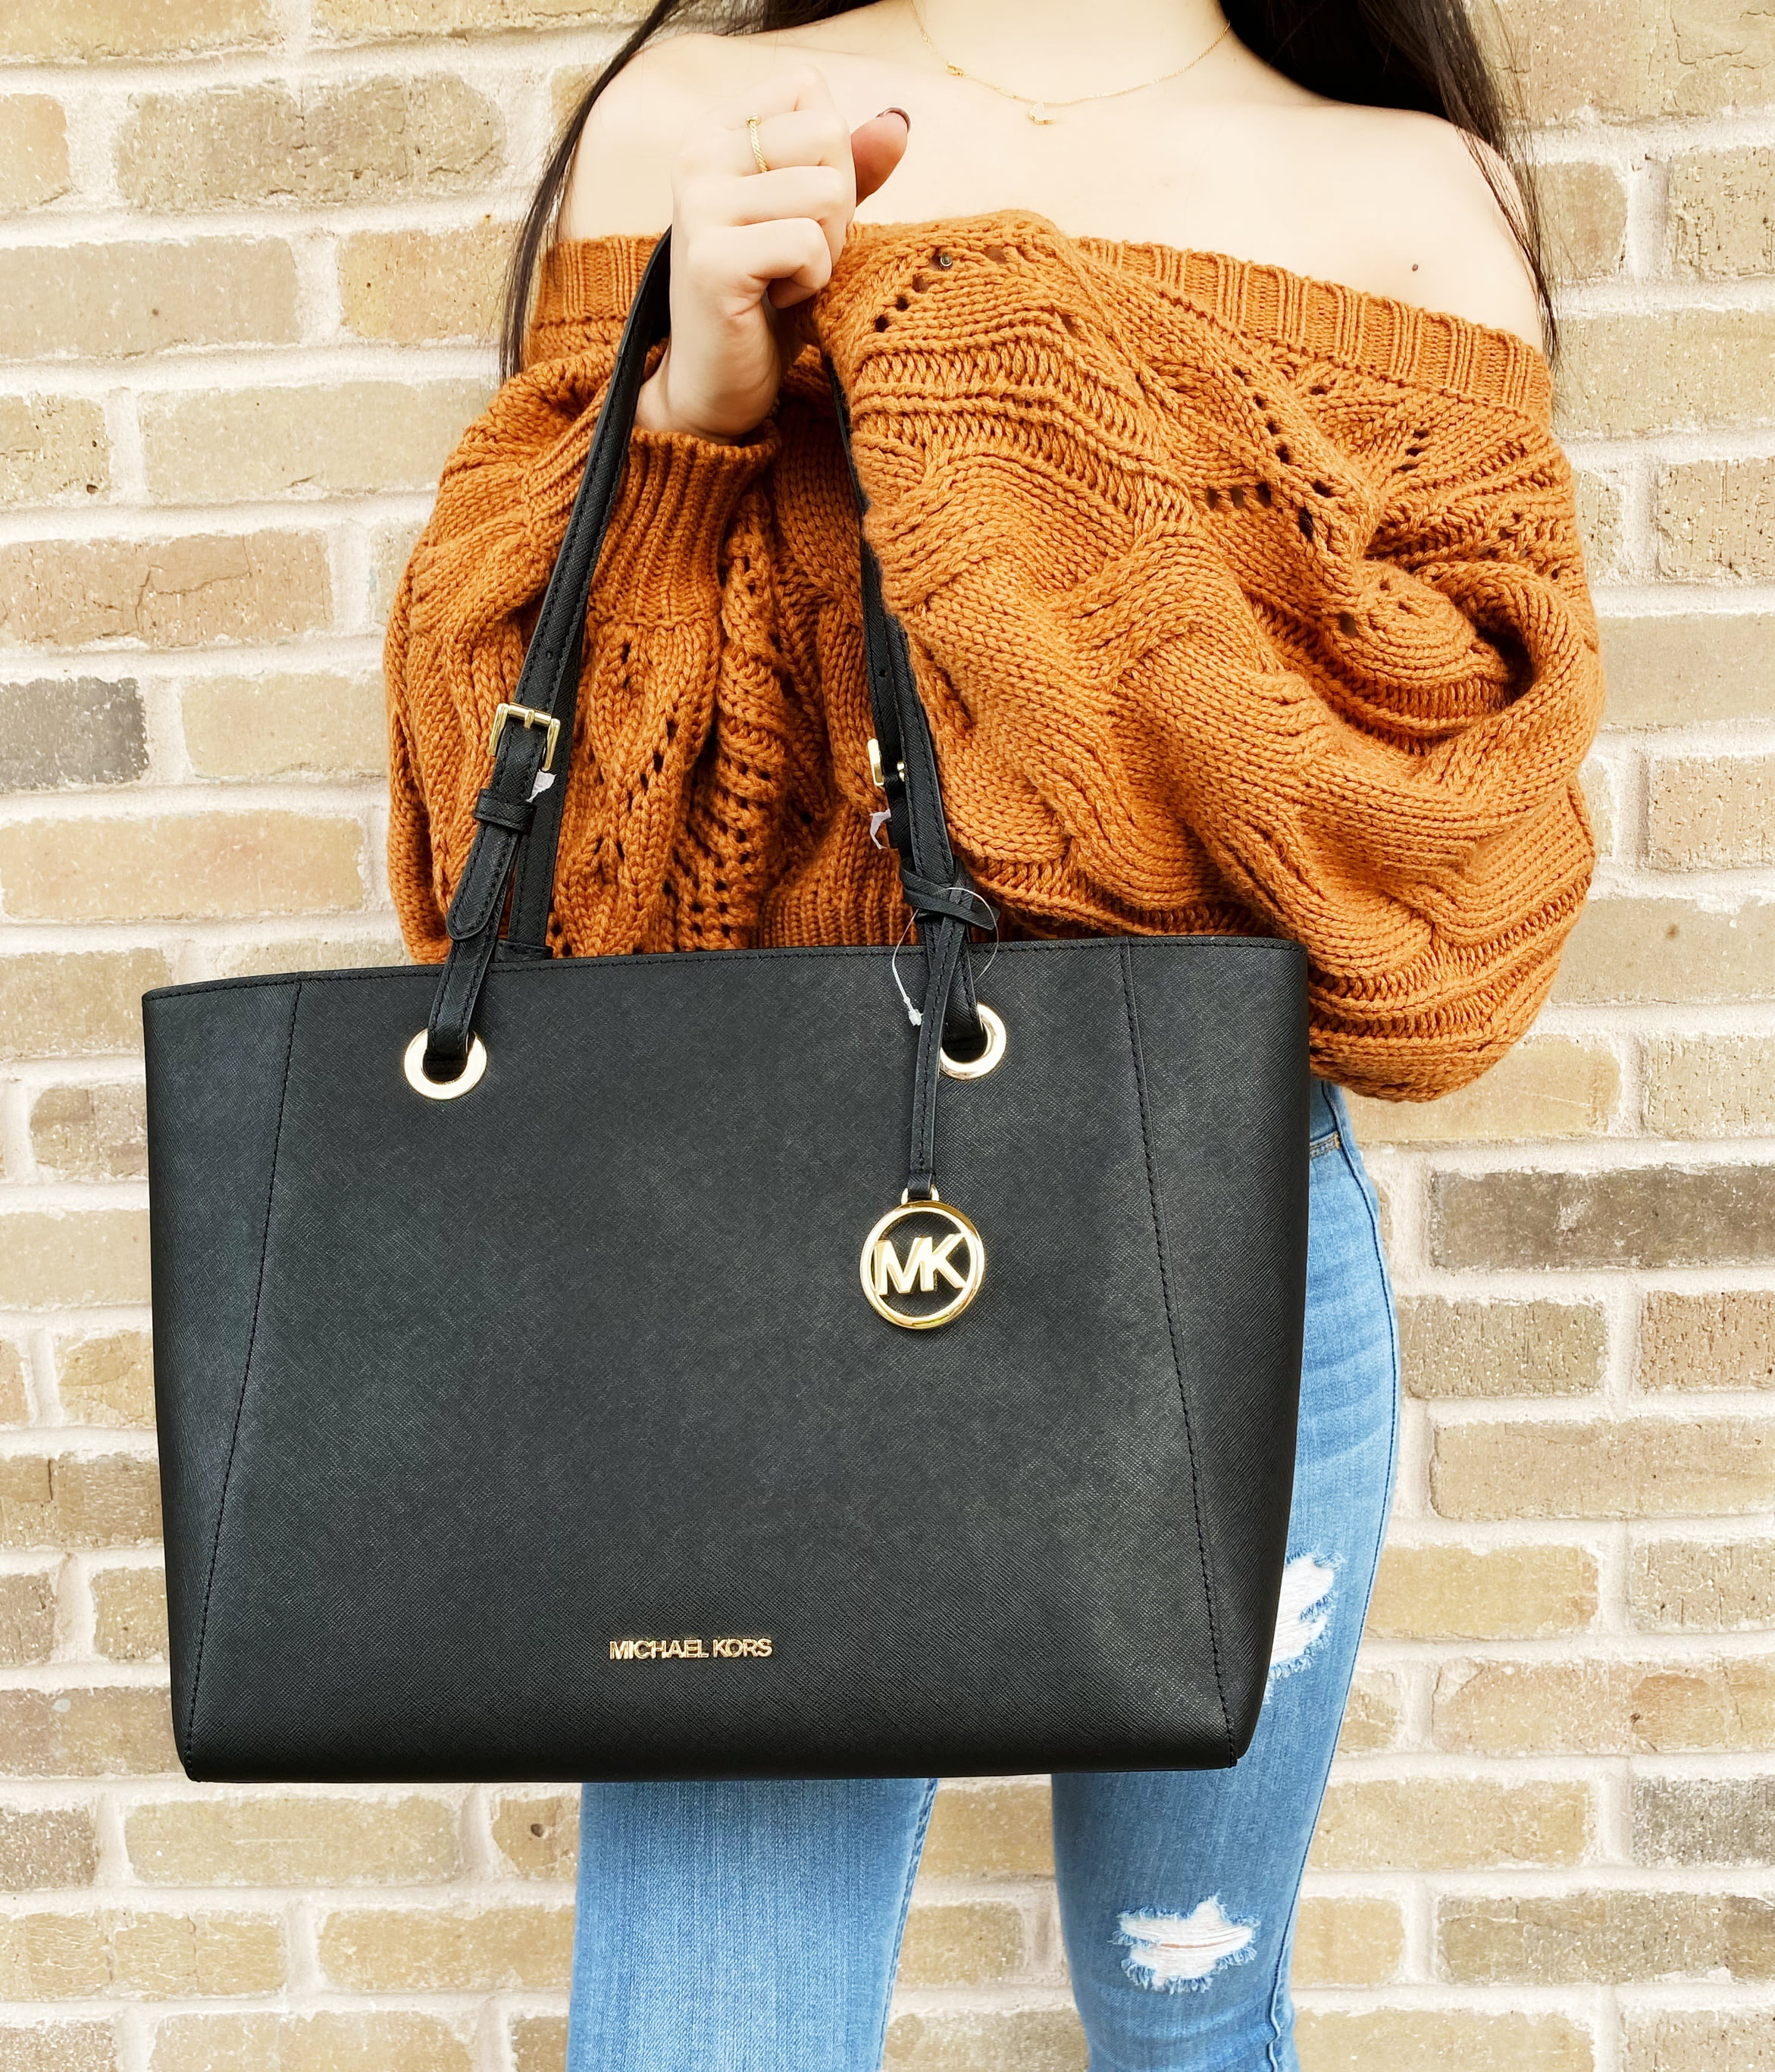 Michael Kors Walsh Multifunctional Leather Tote Bag Handbag Black - Walmart.com